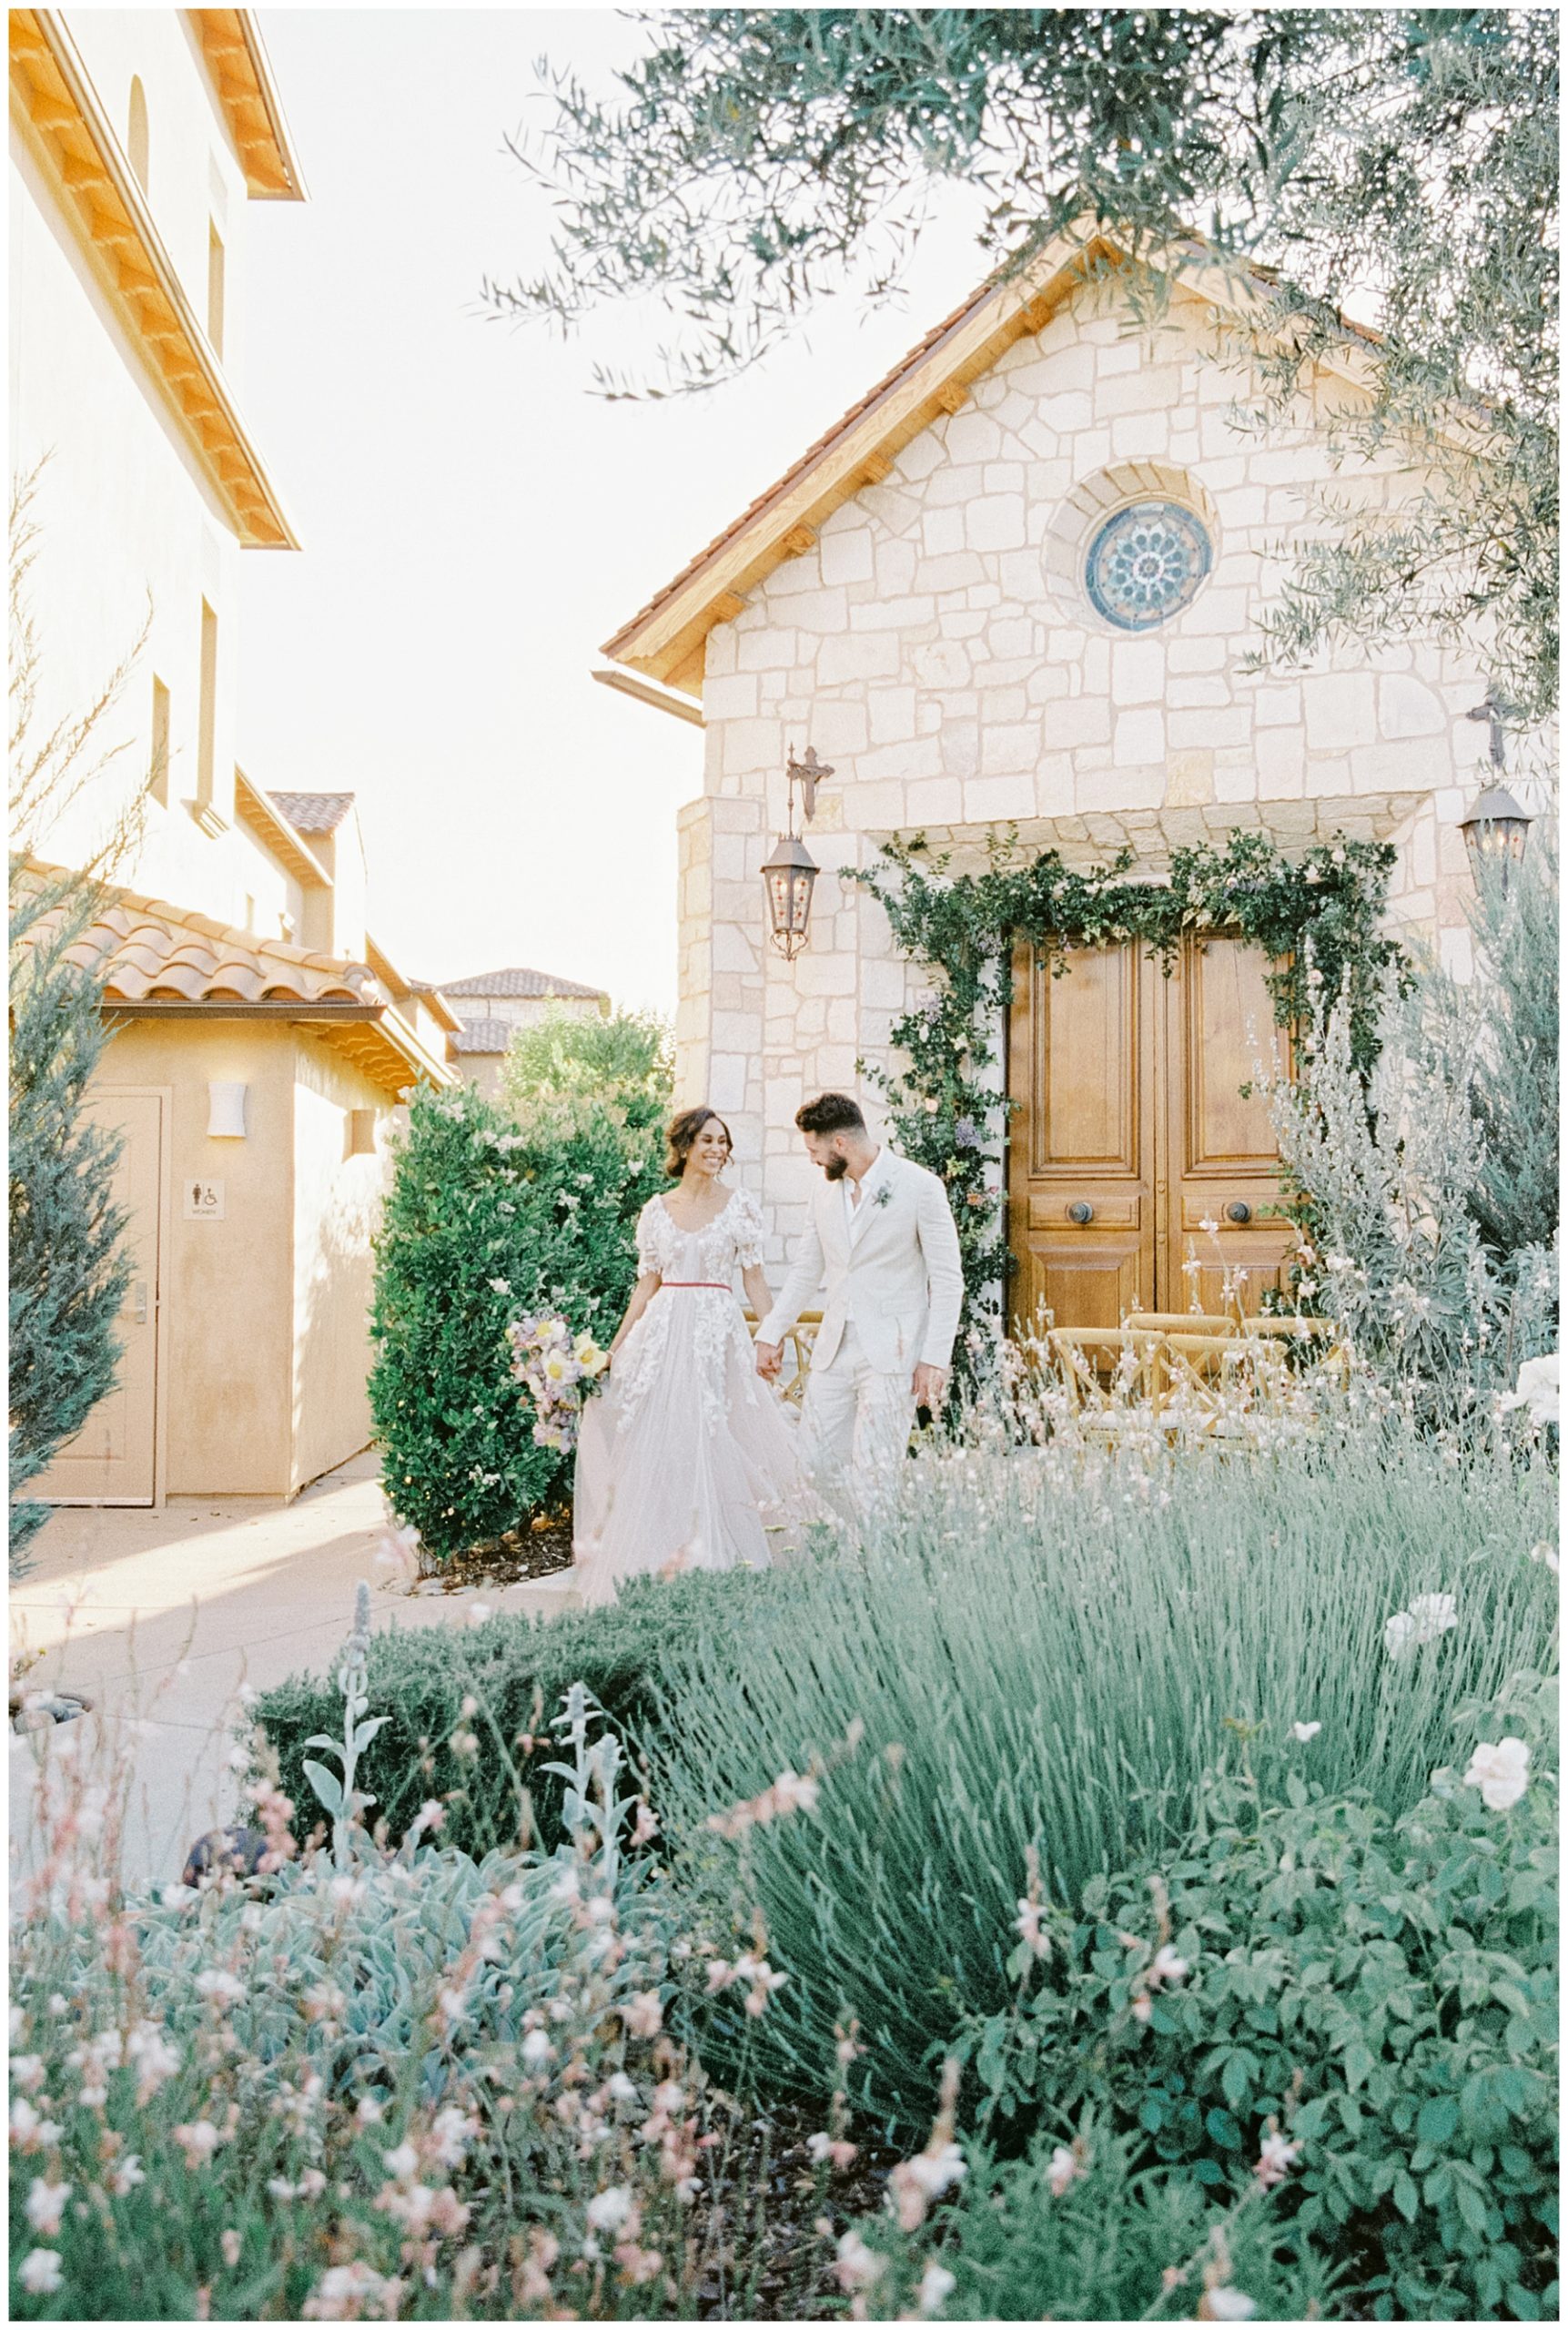 fairytale like garden wedding portraits at Allegretto Vineyard Resort Wedding in Paso Robles, CA